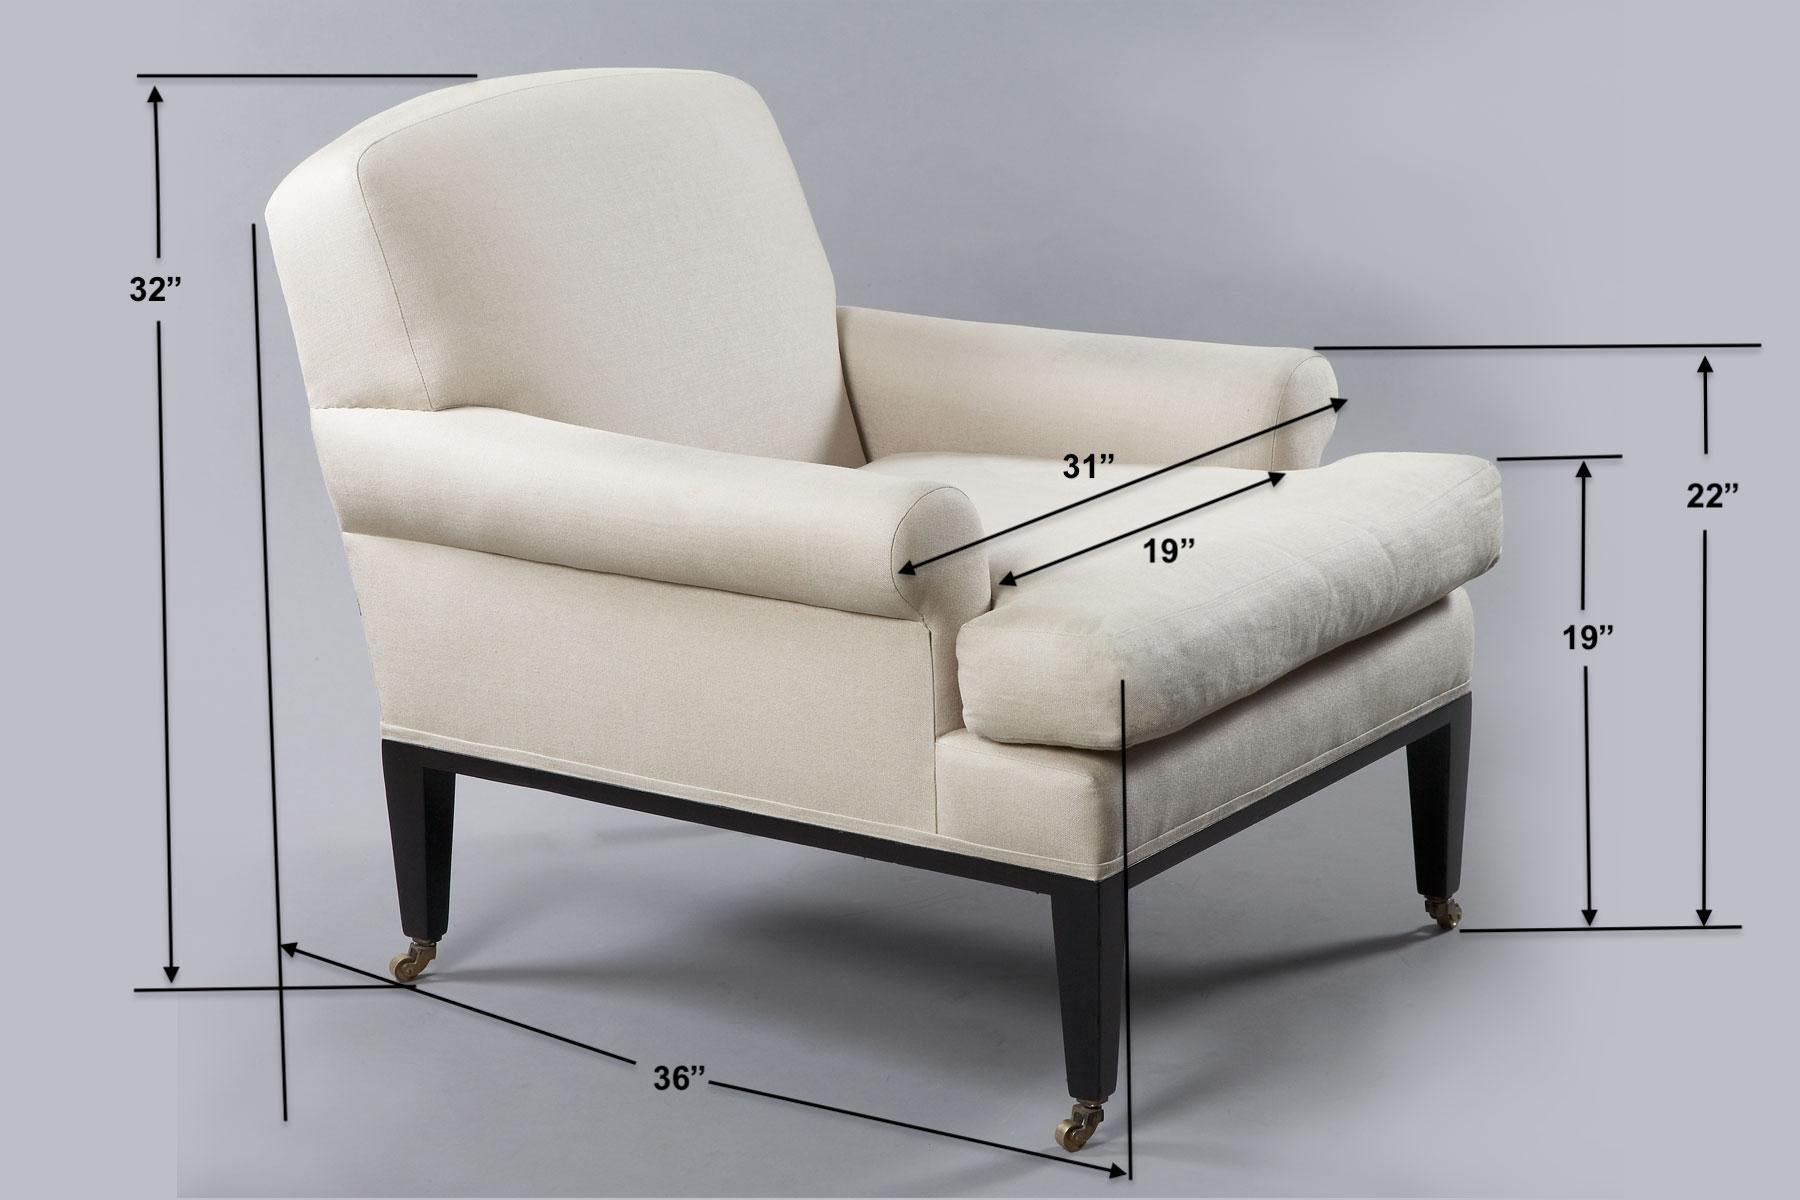 Upholstery Rive Gauche Armchair, by Bourgeois Boheme Atelier